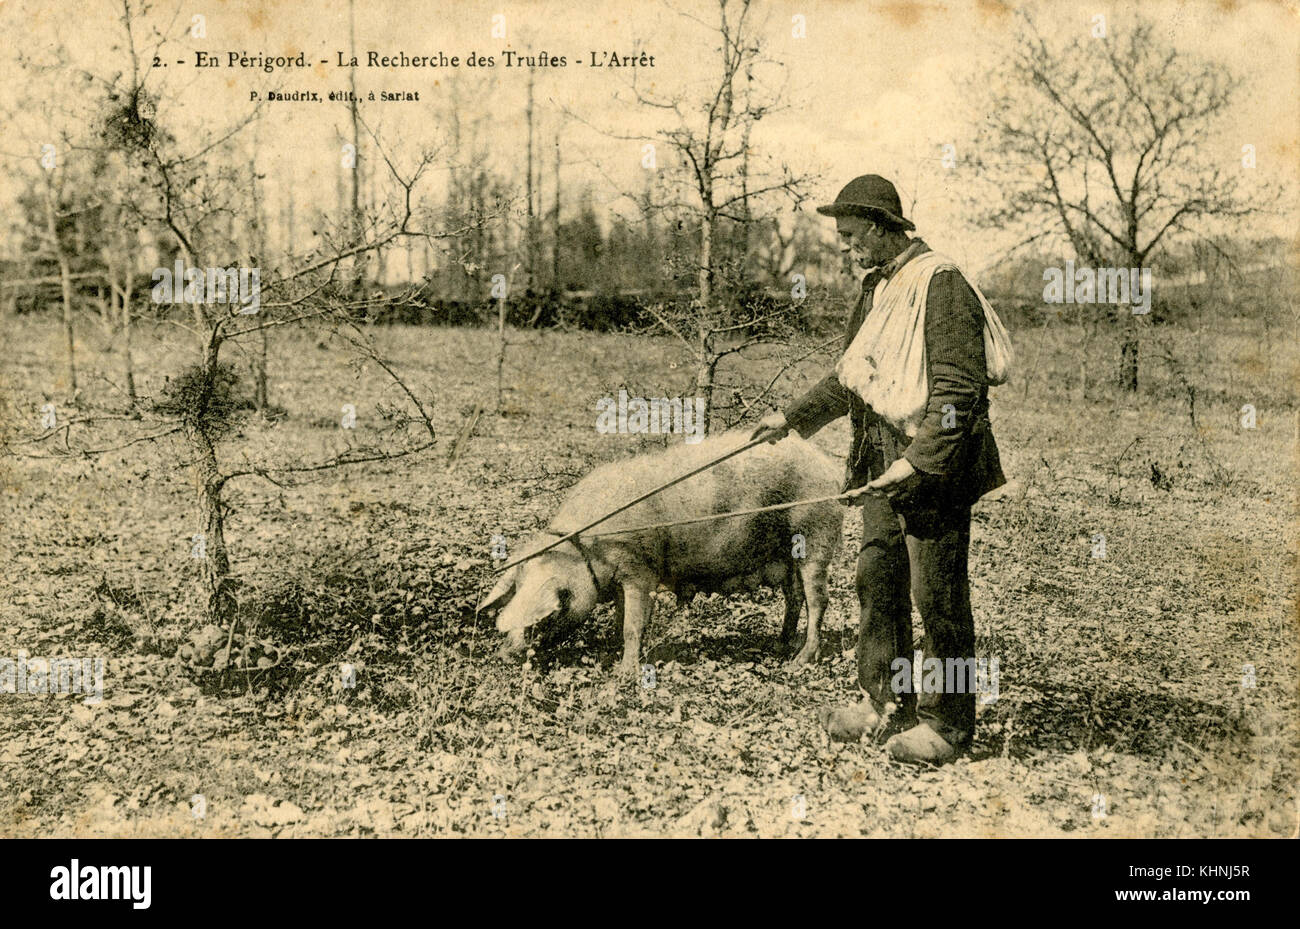 Truffle searching with a pig in Perigord (Trüffelsuche mit einem Schwein im Perigord) Stock Photo